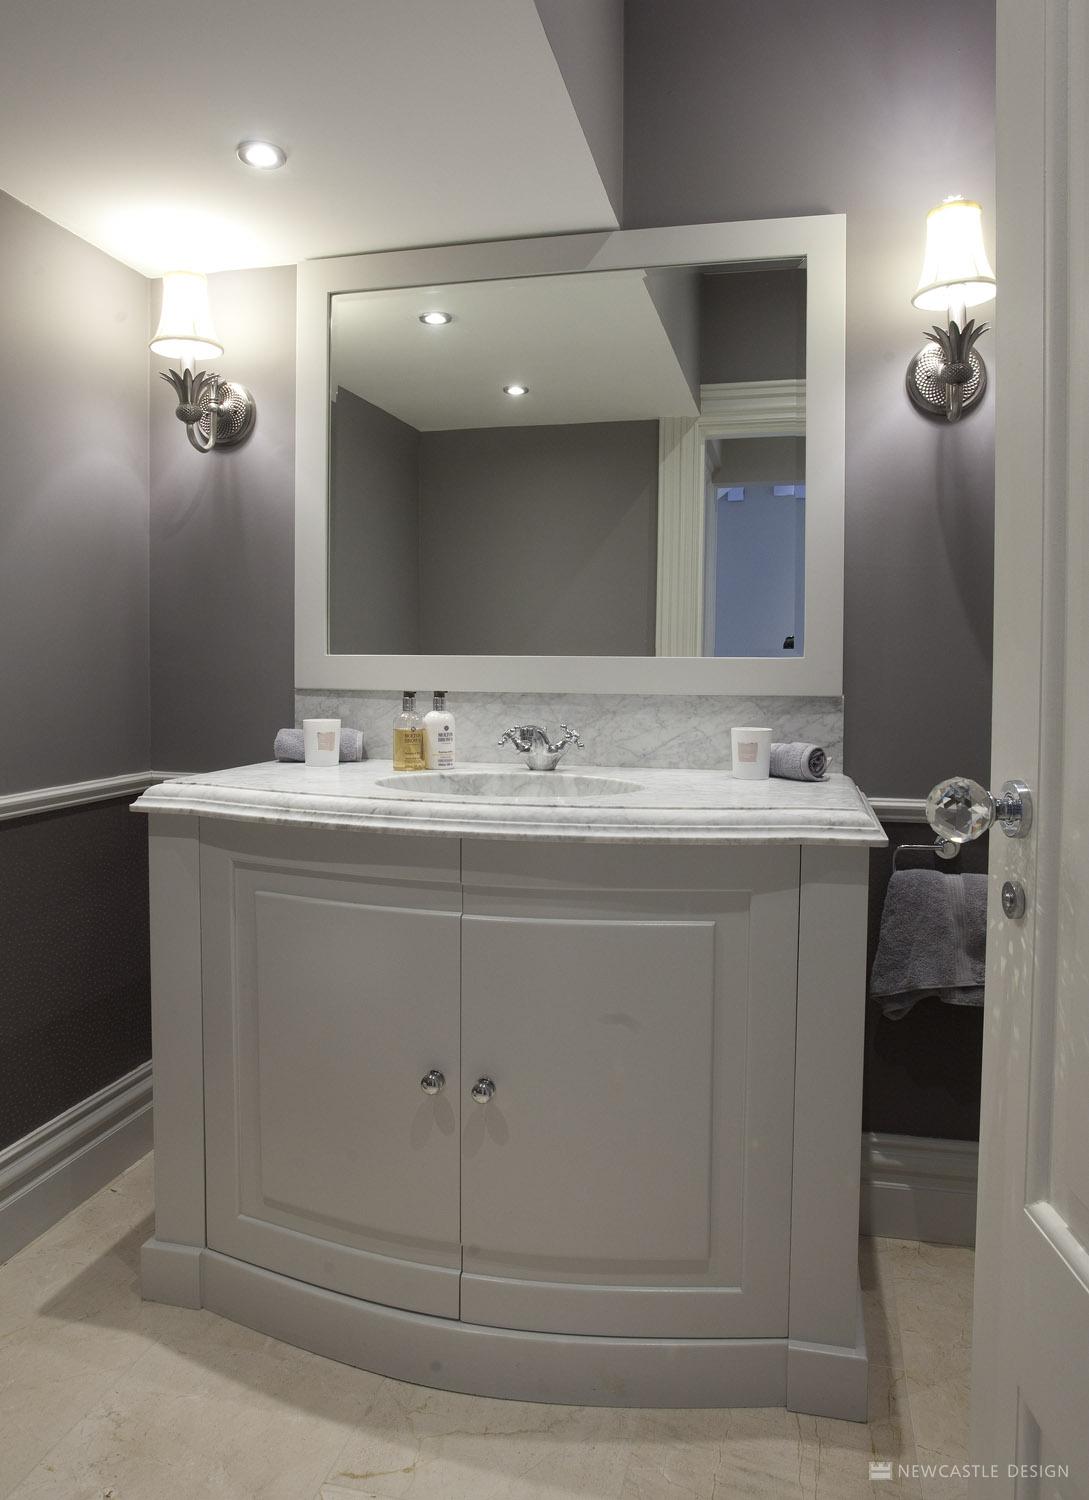 Bathroom Under Sink Cabinets Ireland, Double Sink Vanity Units Ireland